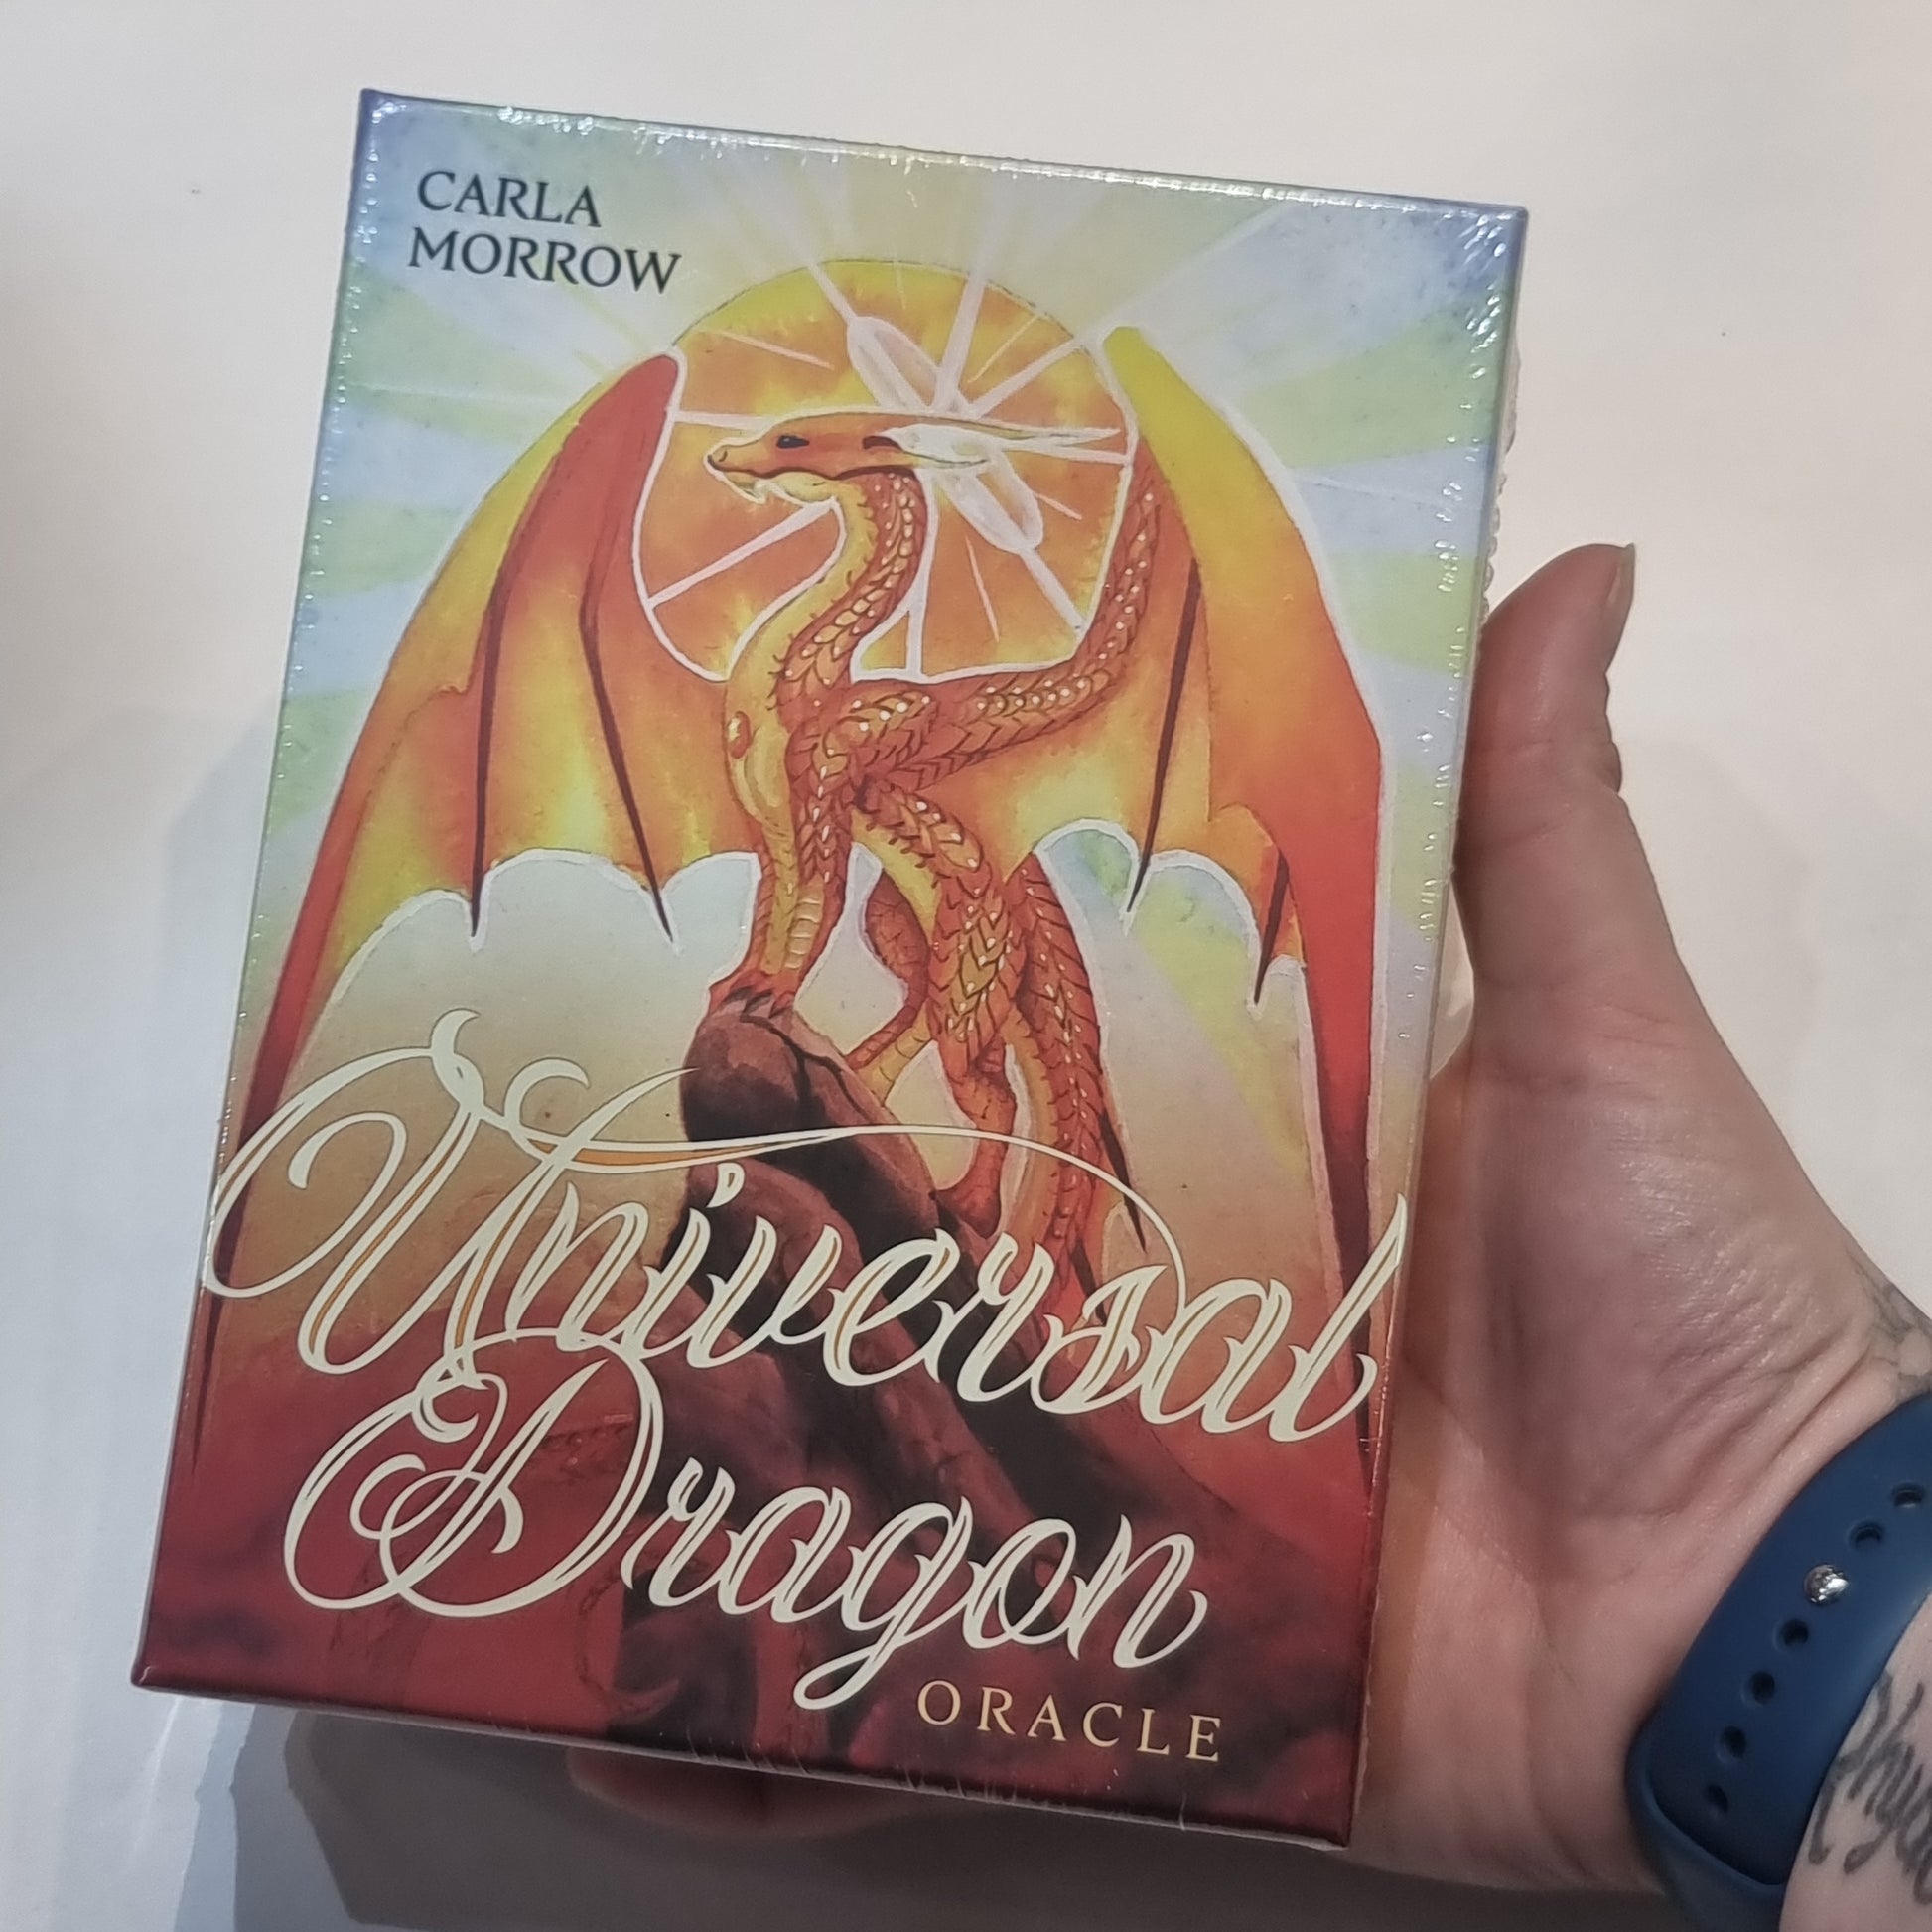 Universal dragon oracle - Rivendell Shop